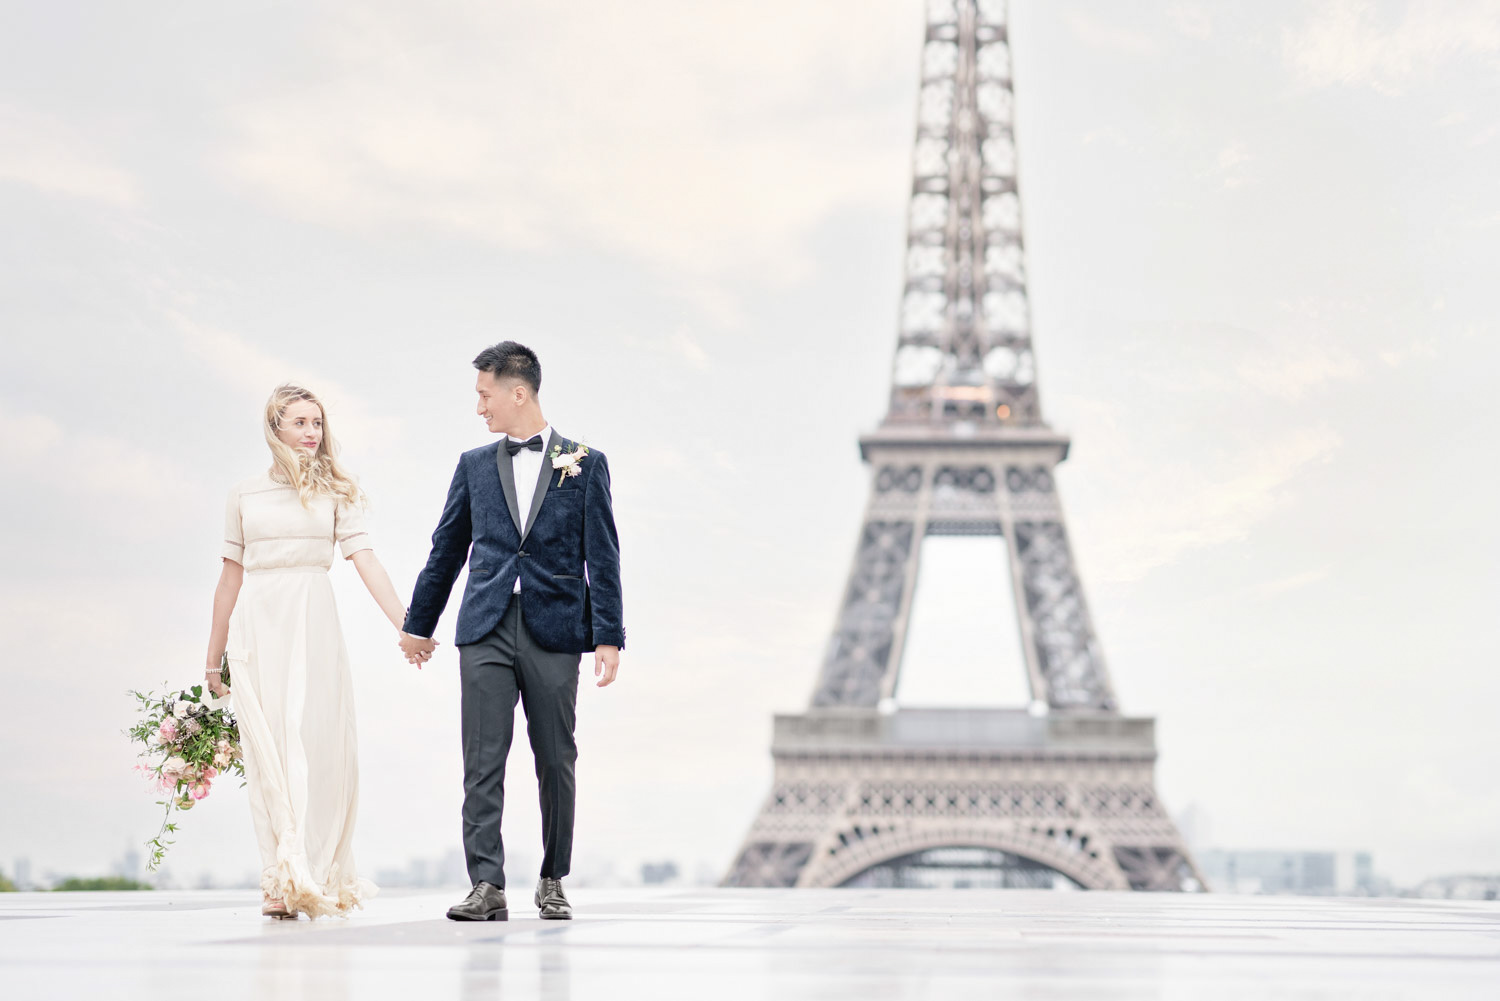 Paris Wedding Chapels  Reception Venues - The Knot